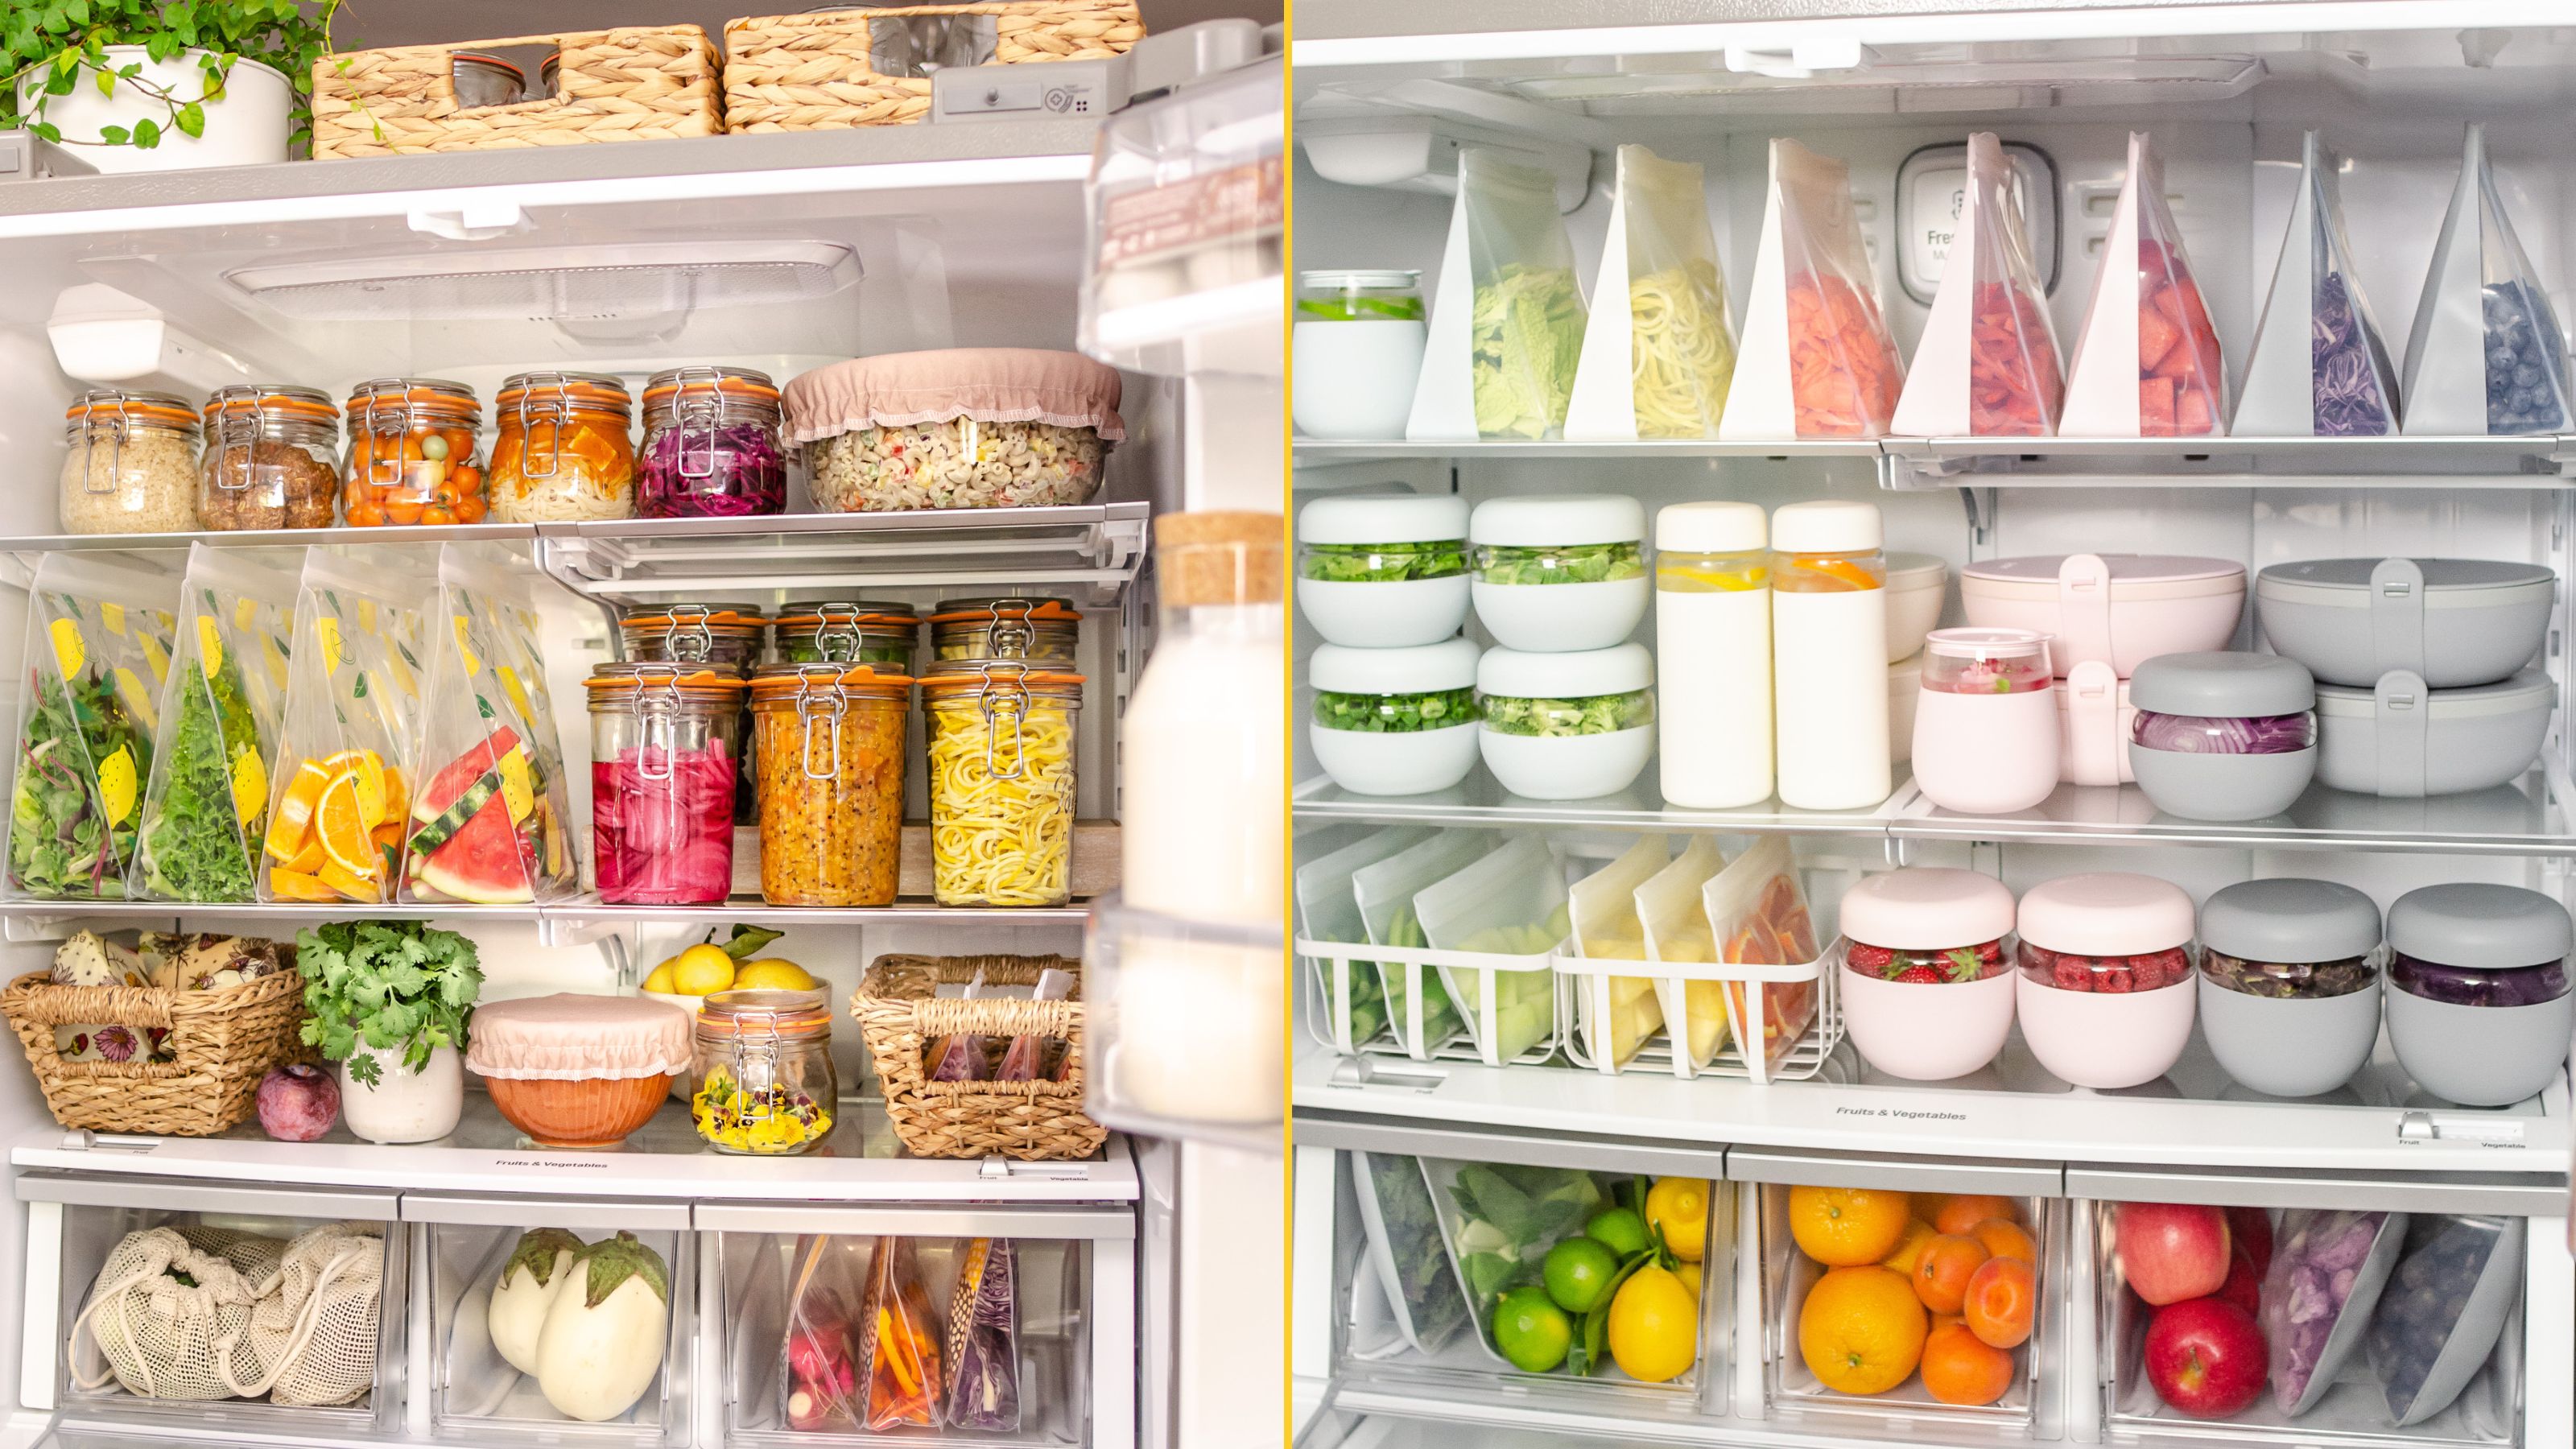 HOOJO Refrigerator Organizer Bins - Home Kitchen Item